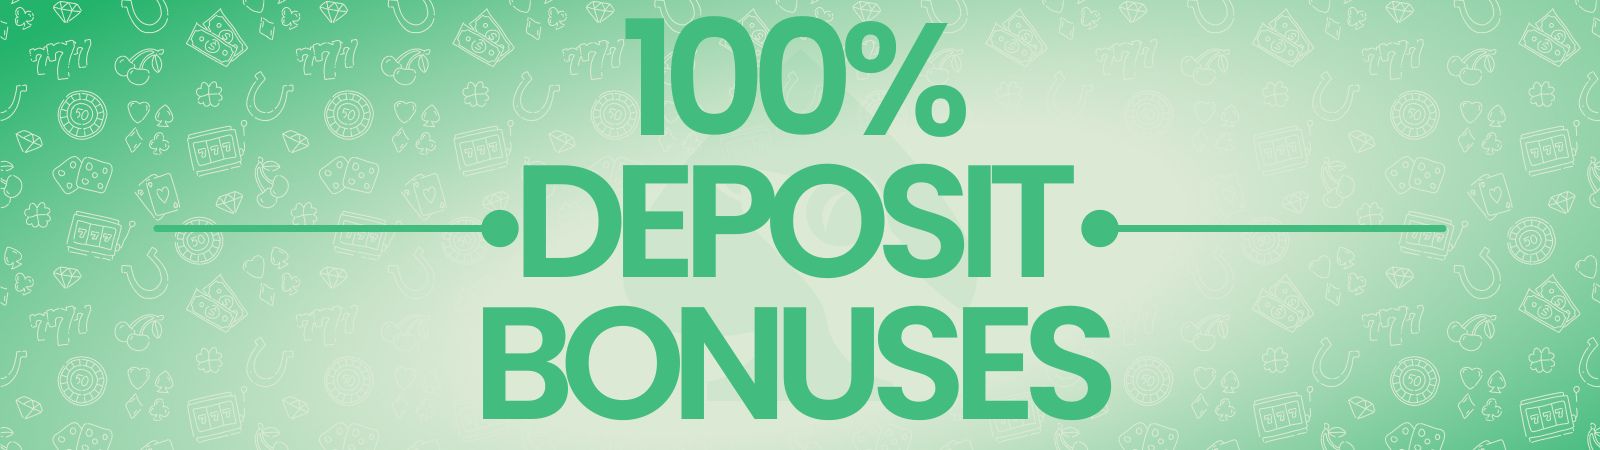 100% deposit casino welcome bonus uk